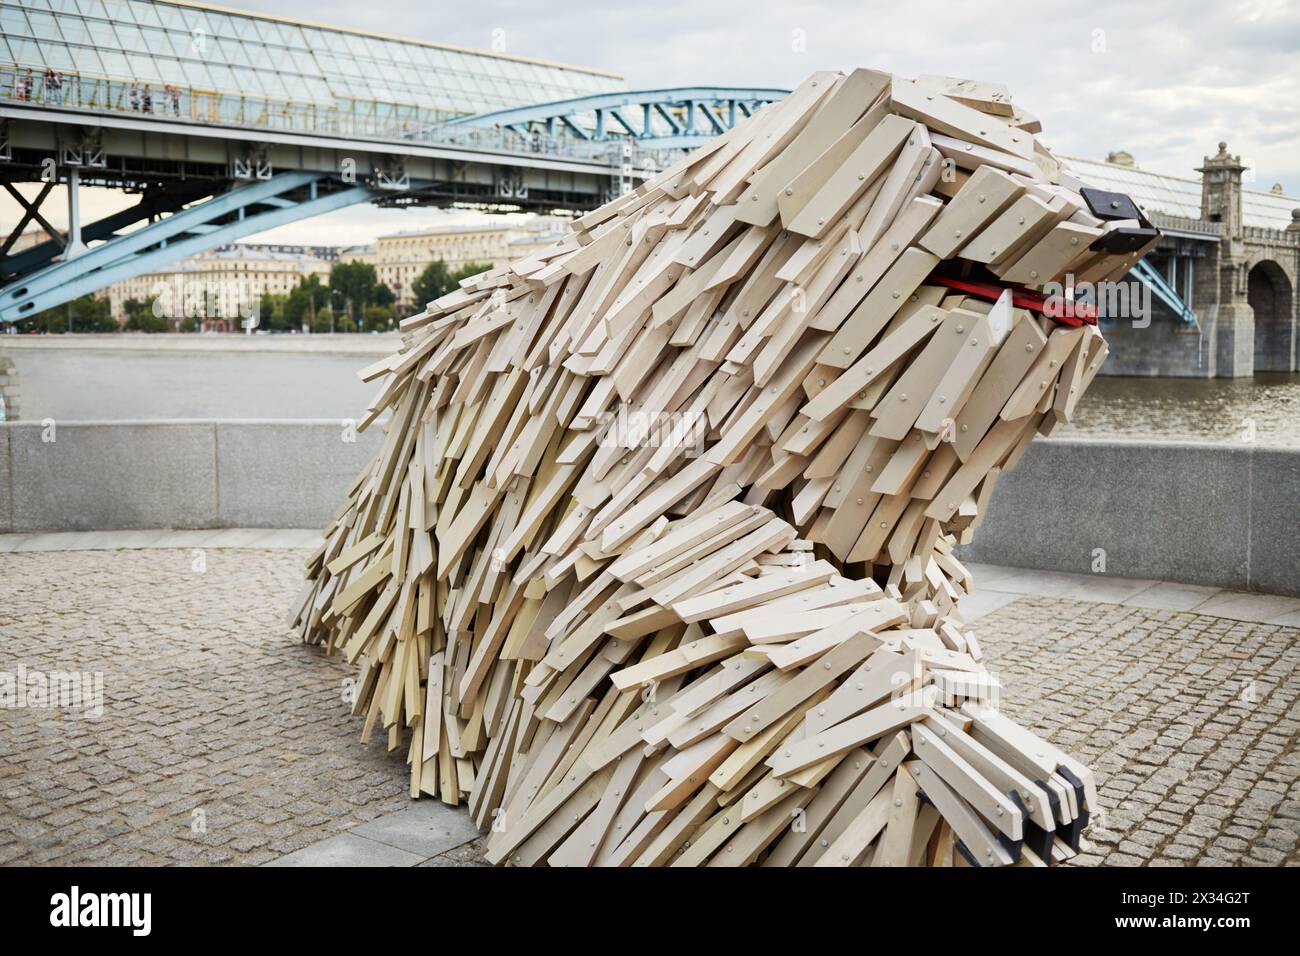 MOSCOW, RUSSIA - JUN 29, 2015: Unique wooden sculpture of a dog breed Komondor by Gabor Miklos Szoke, internationally known sculptor, on Pushkinskaya Stock Photo